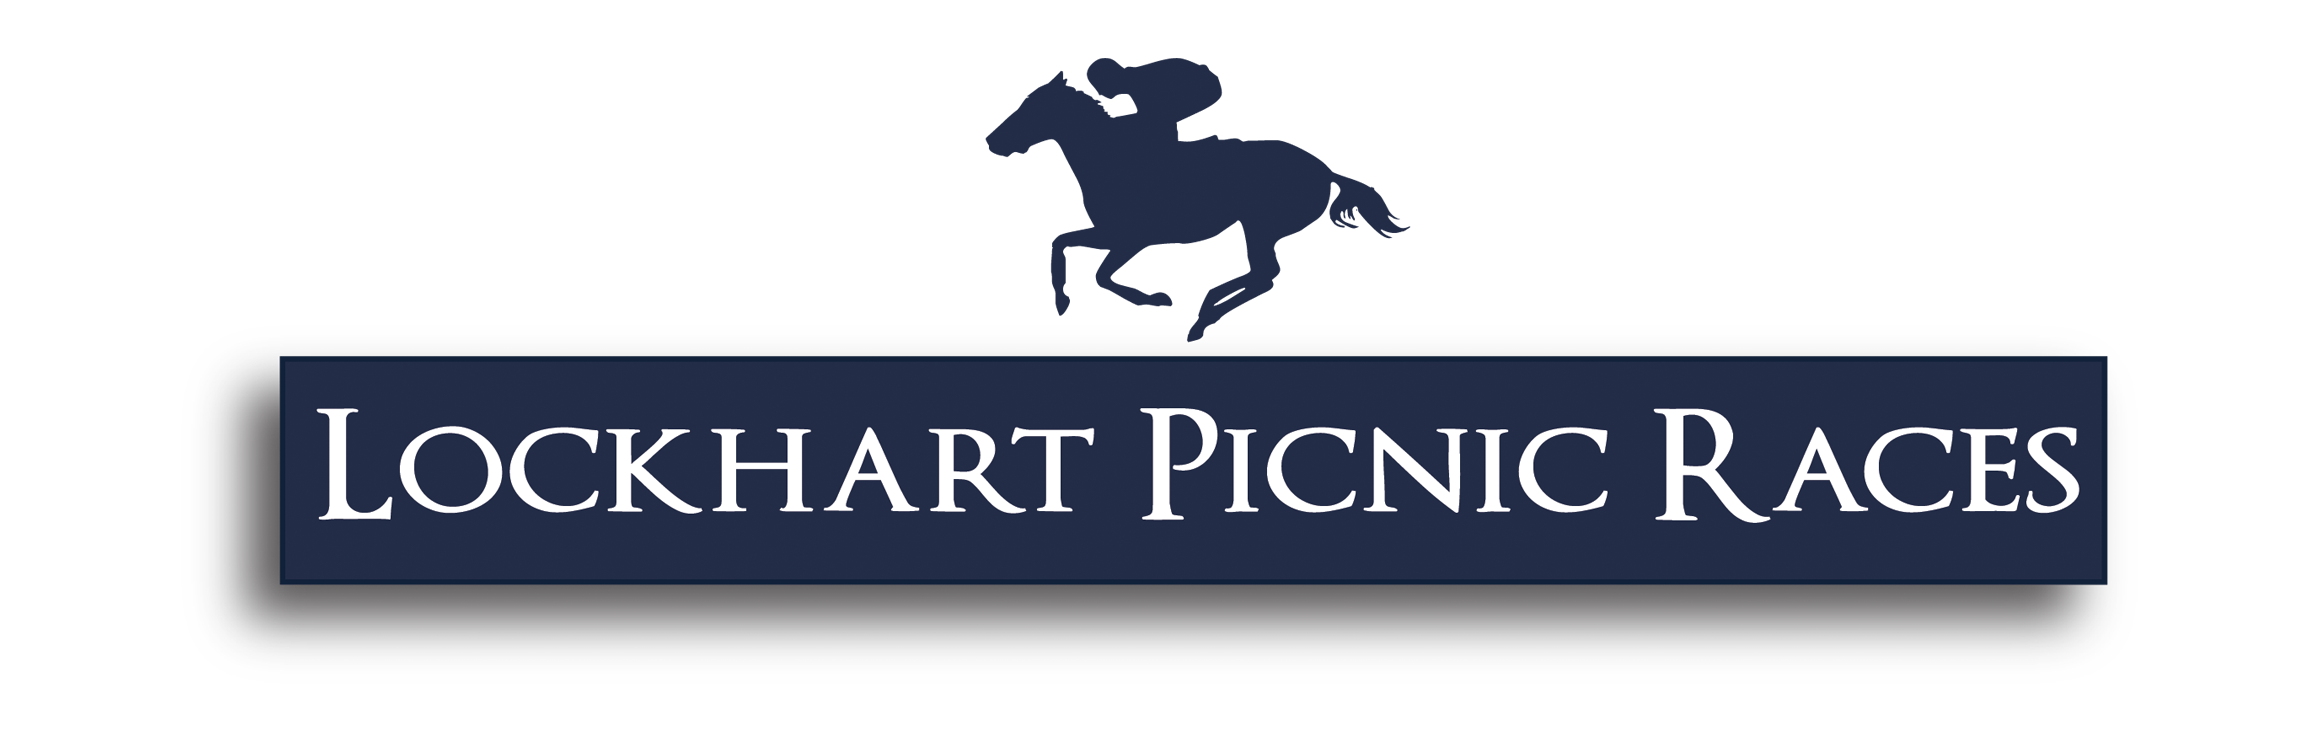 Lockhart Picnic Races